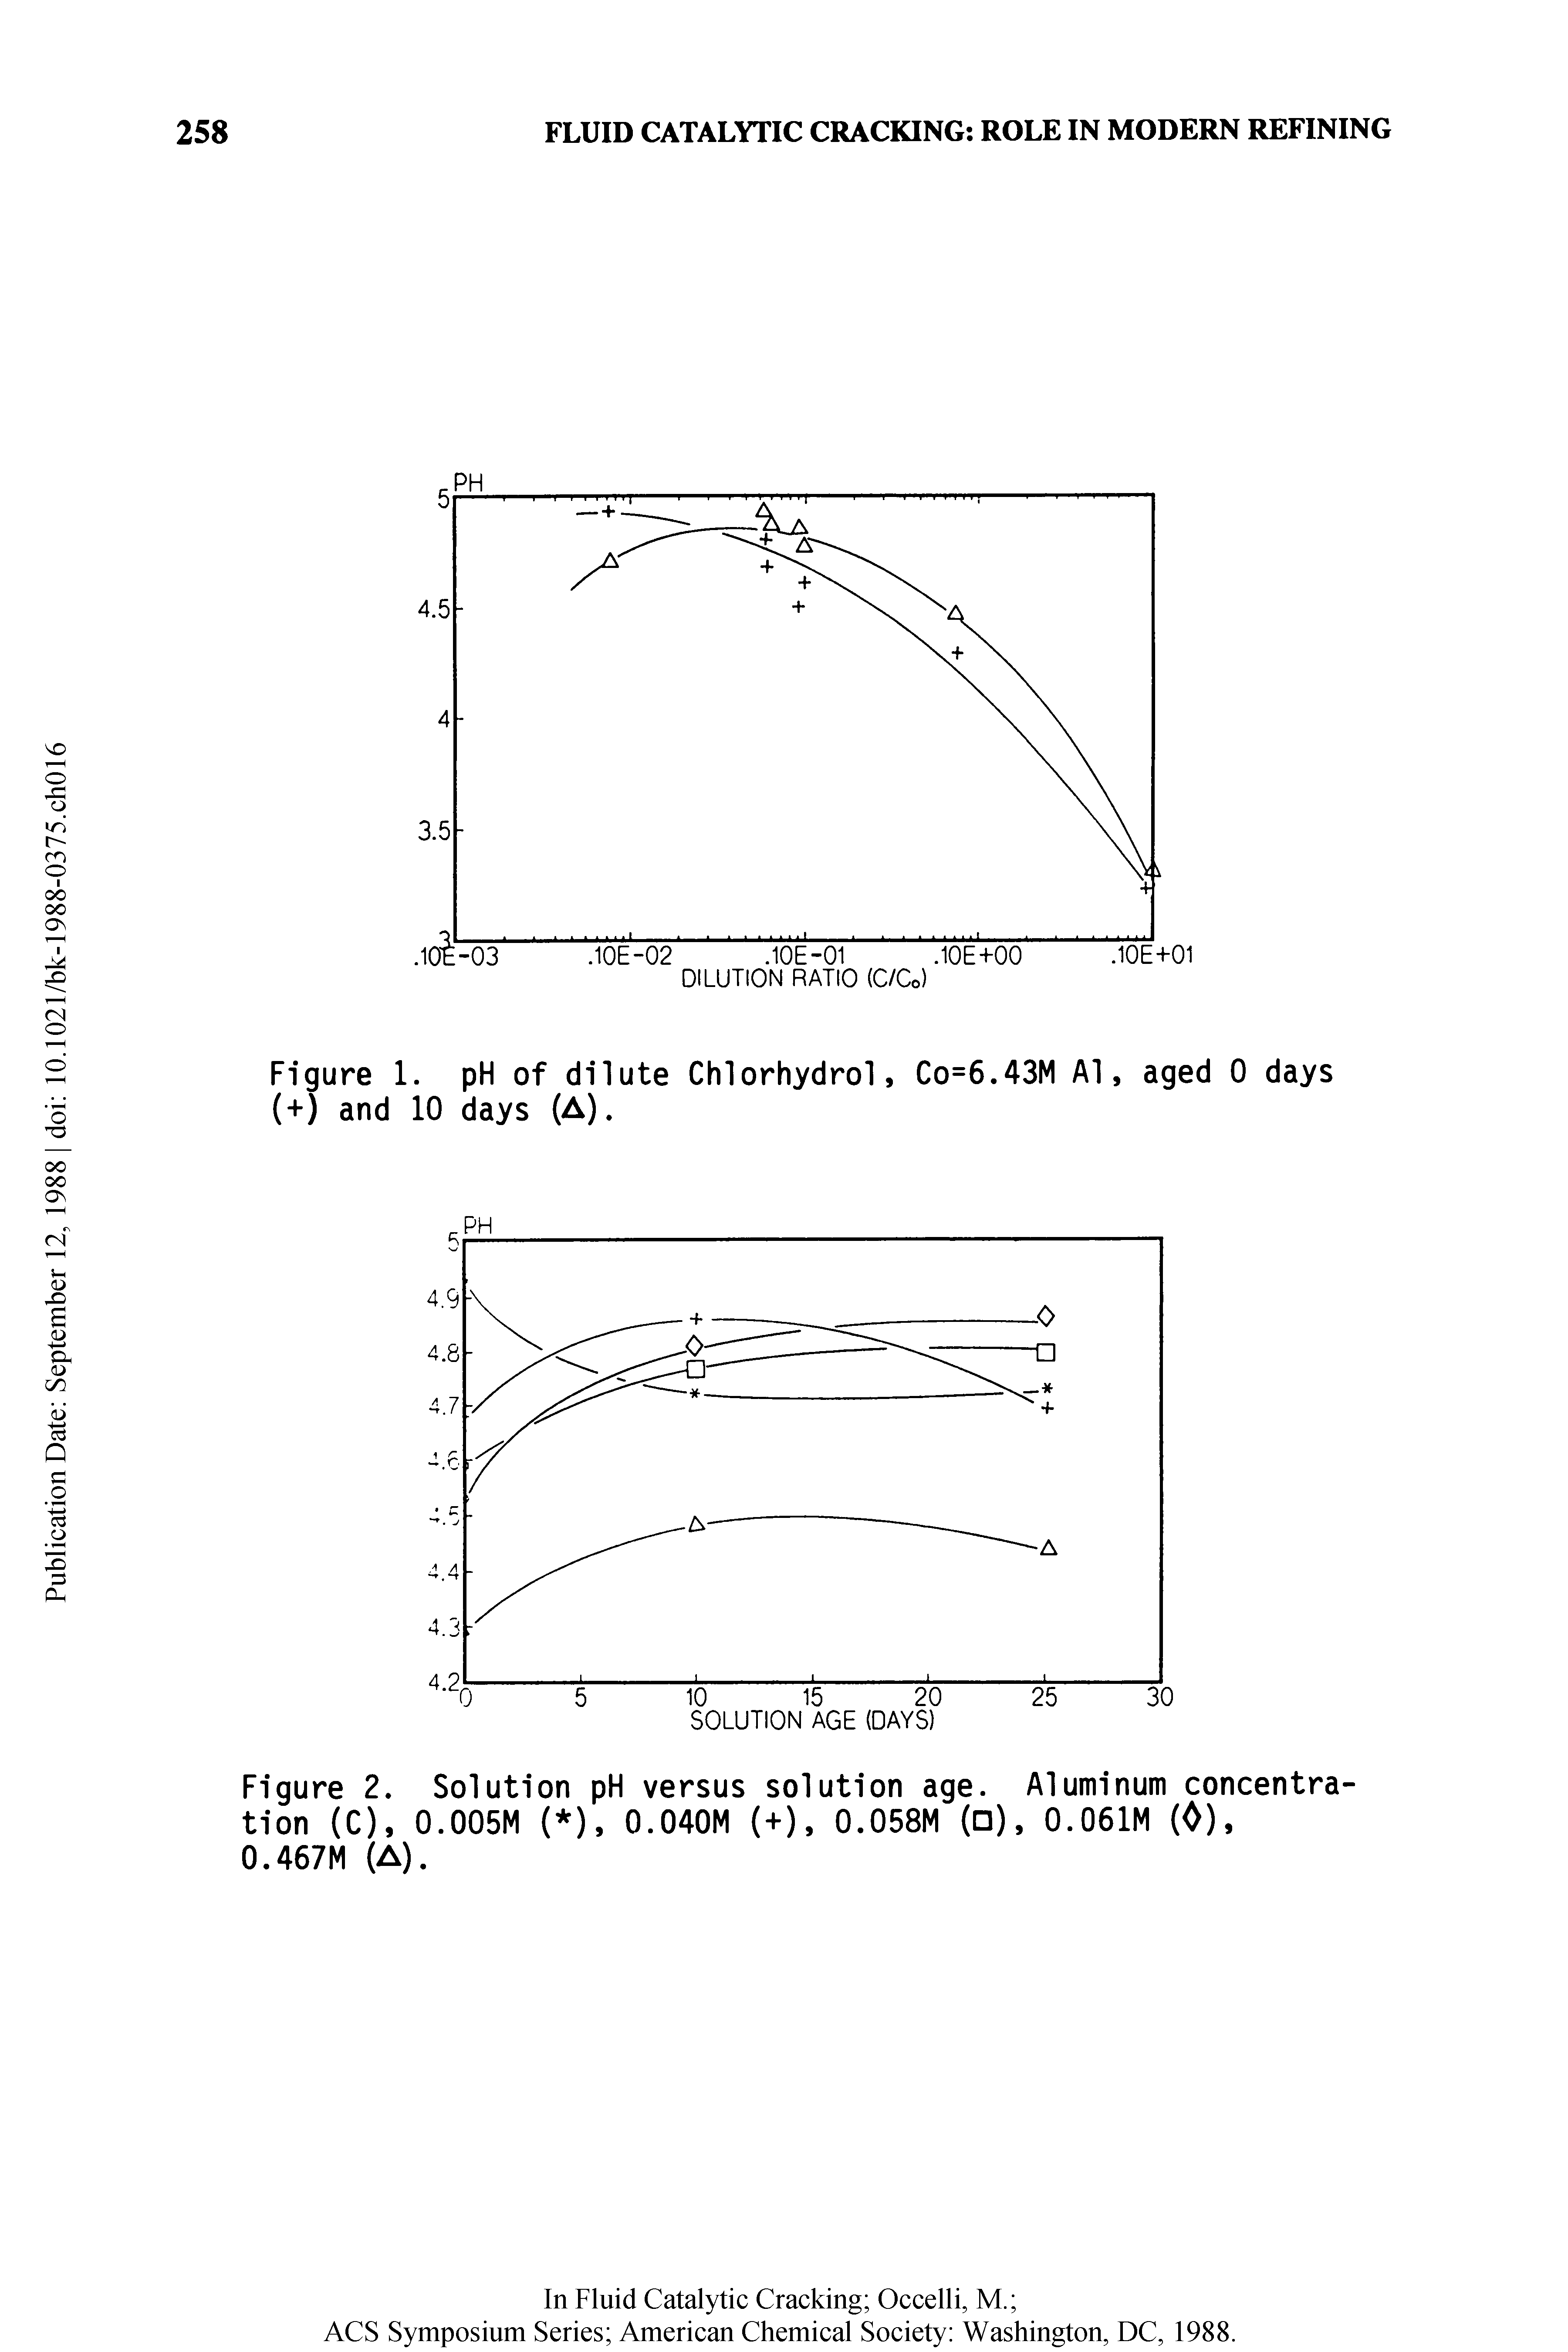 Figure 2. Solution pH versus solution age. Aluminum concentra-tion (C), 0.005M ( ), 0.040M (+), 0.058M ( ), 0.061M (0),...